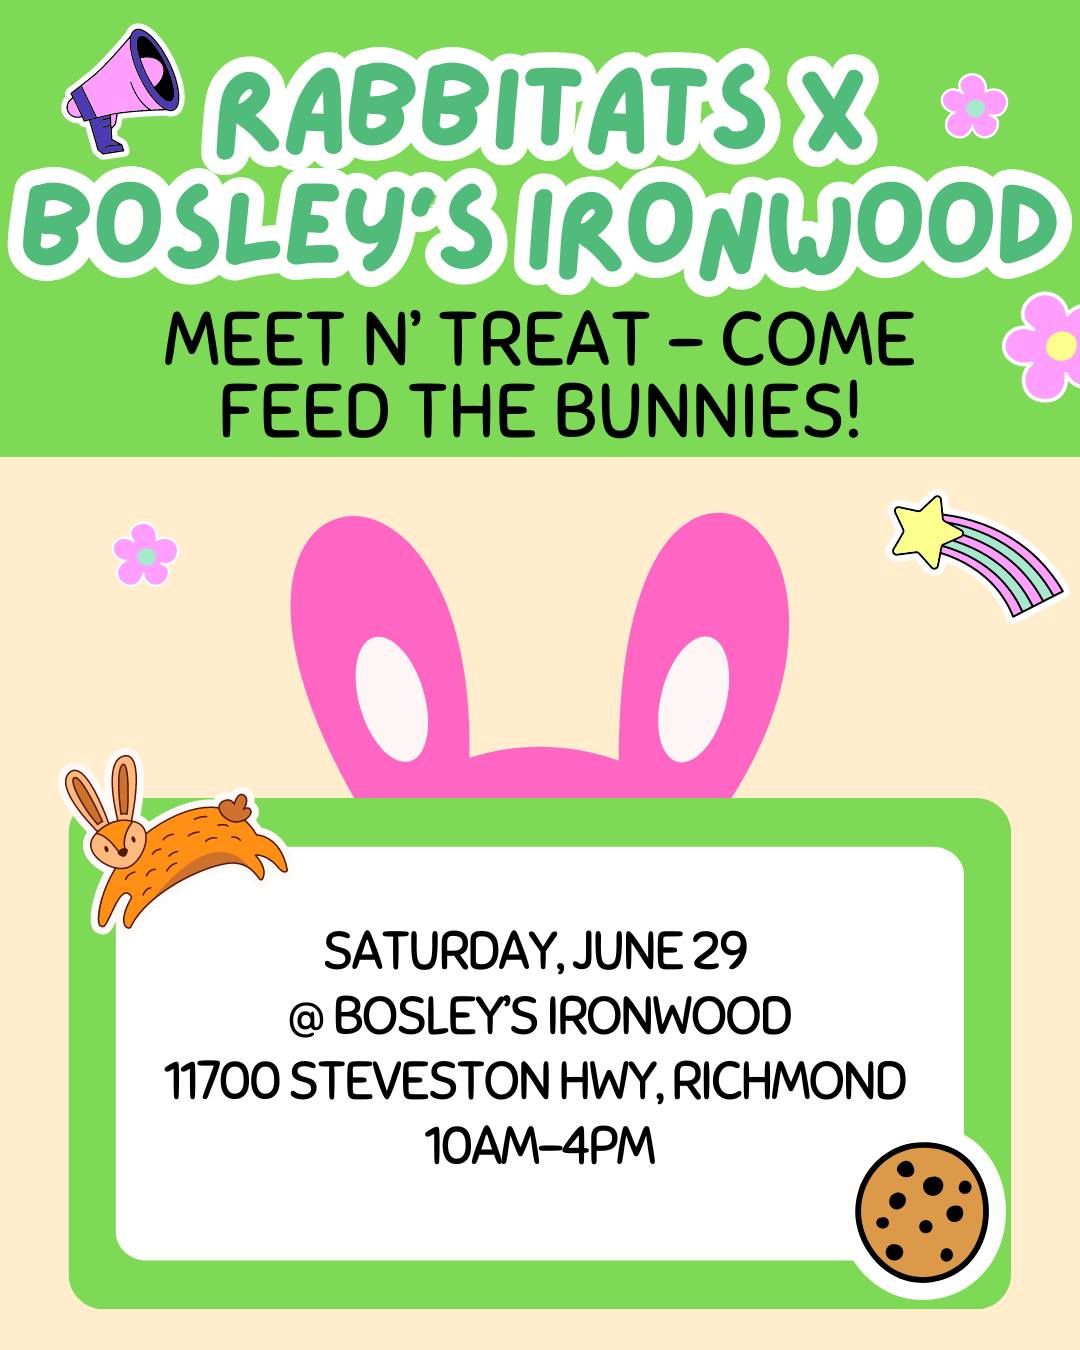 Meet N' Treat at Bosley's Ironwood